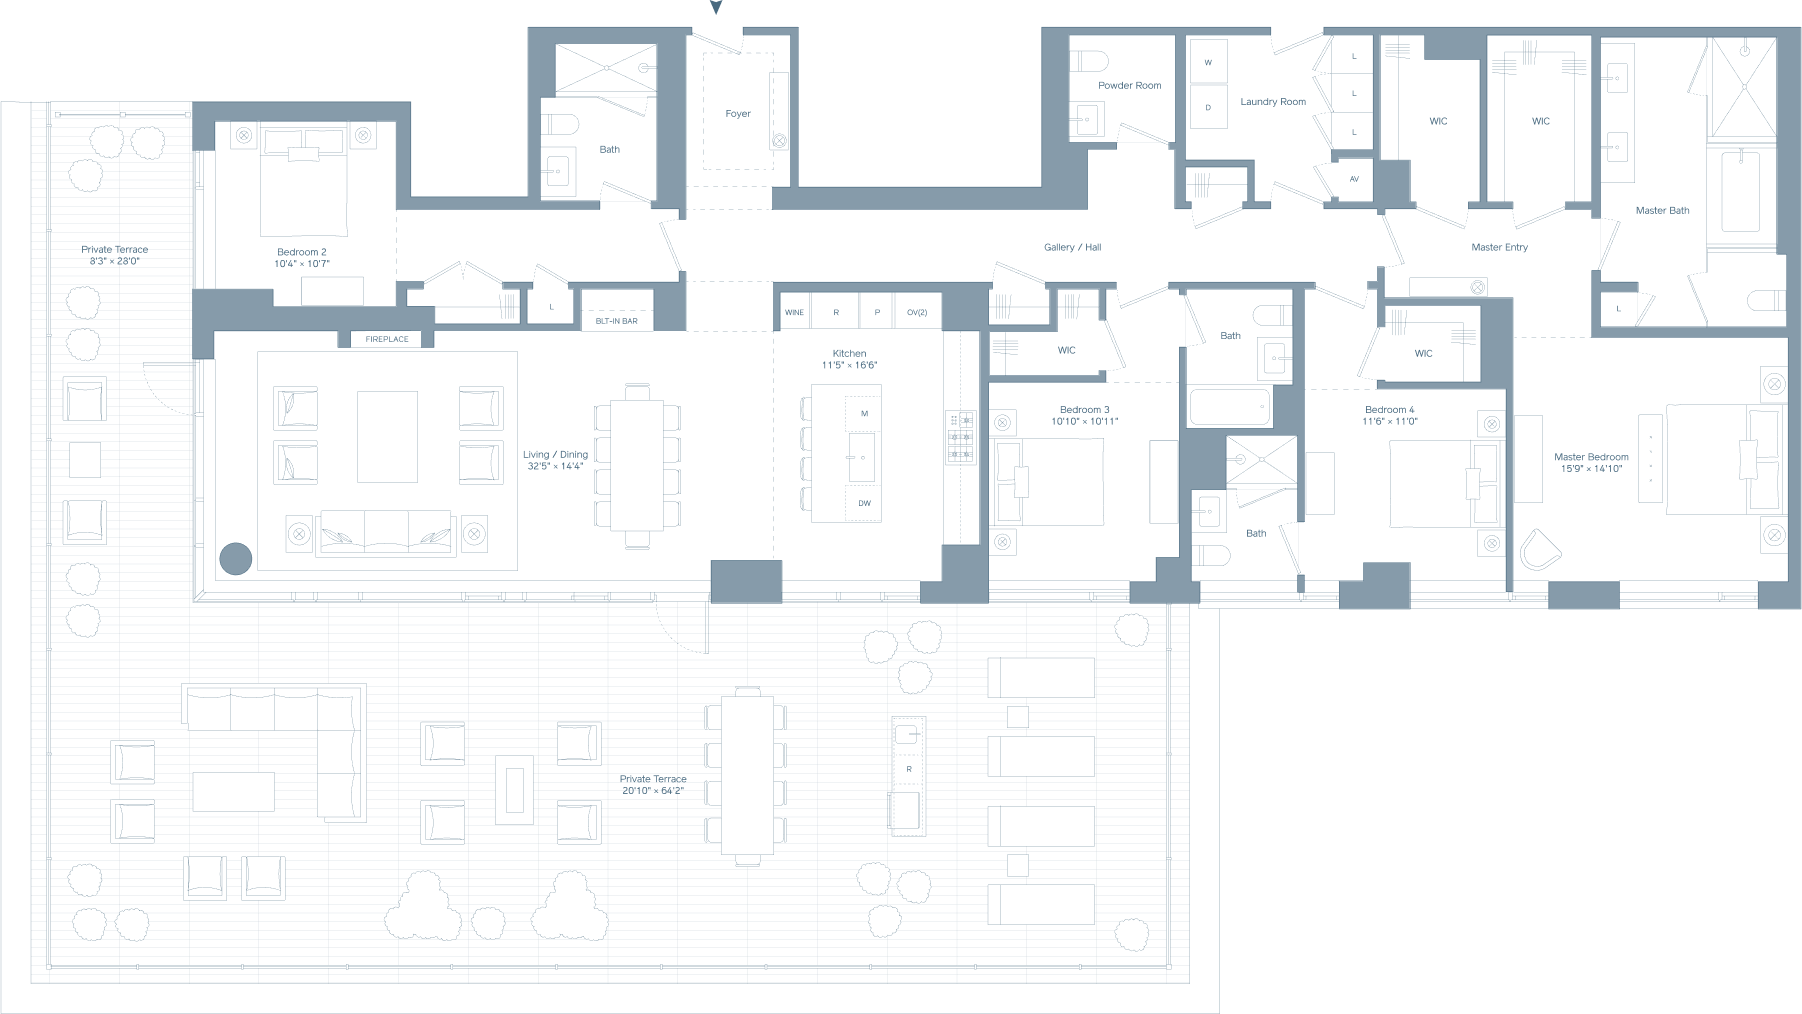 Four bedroom floorplan